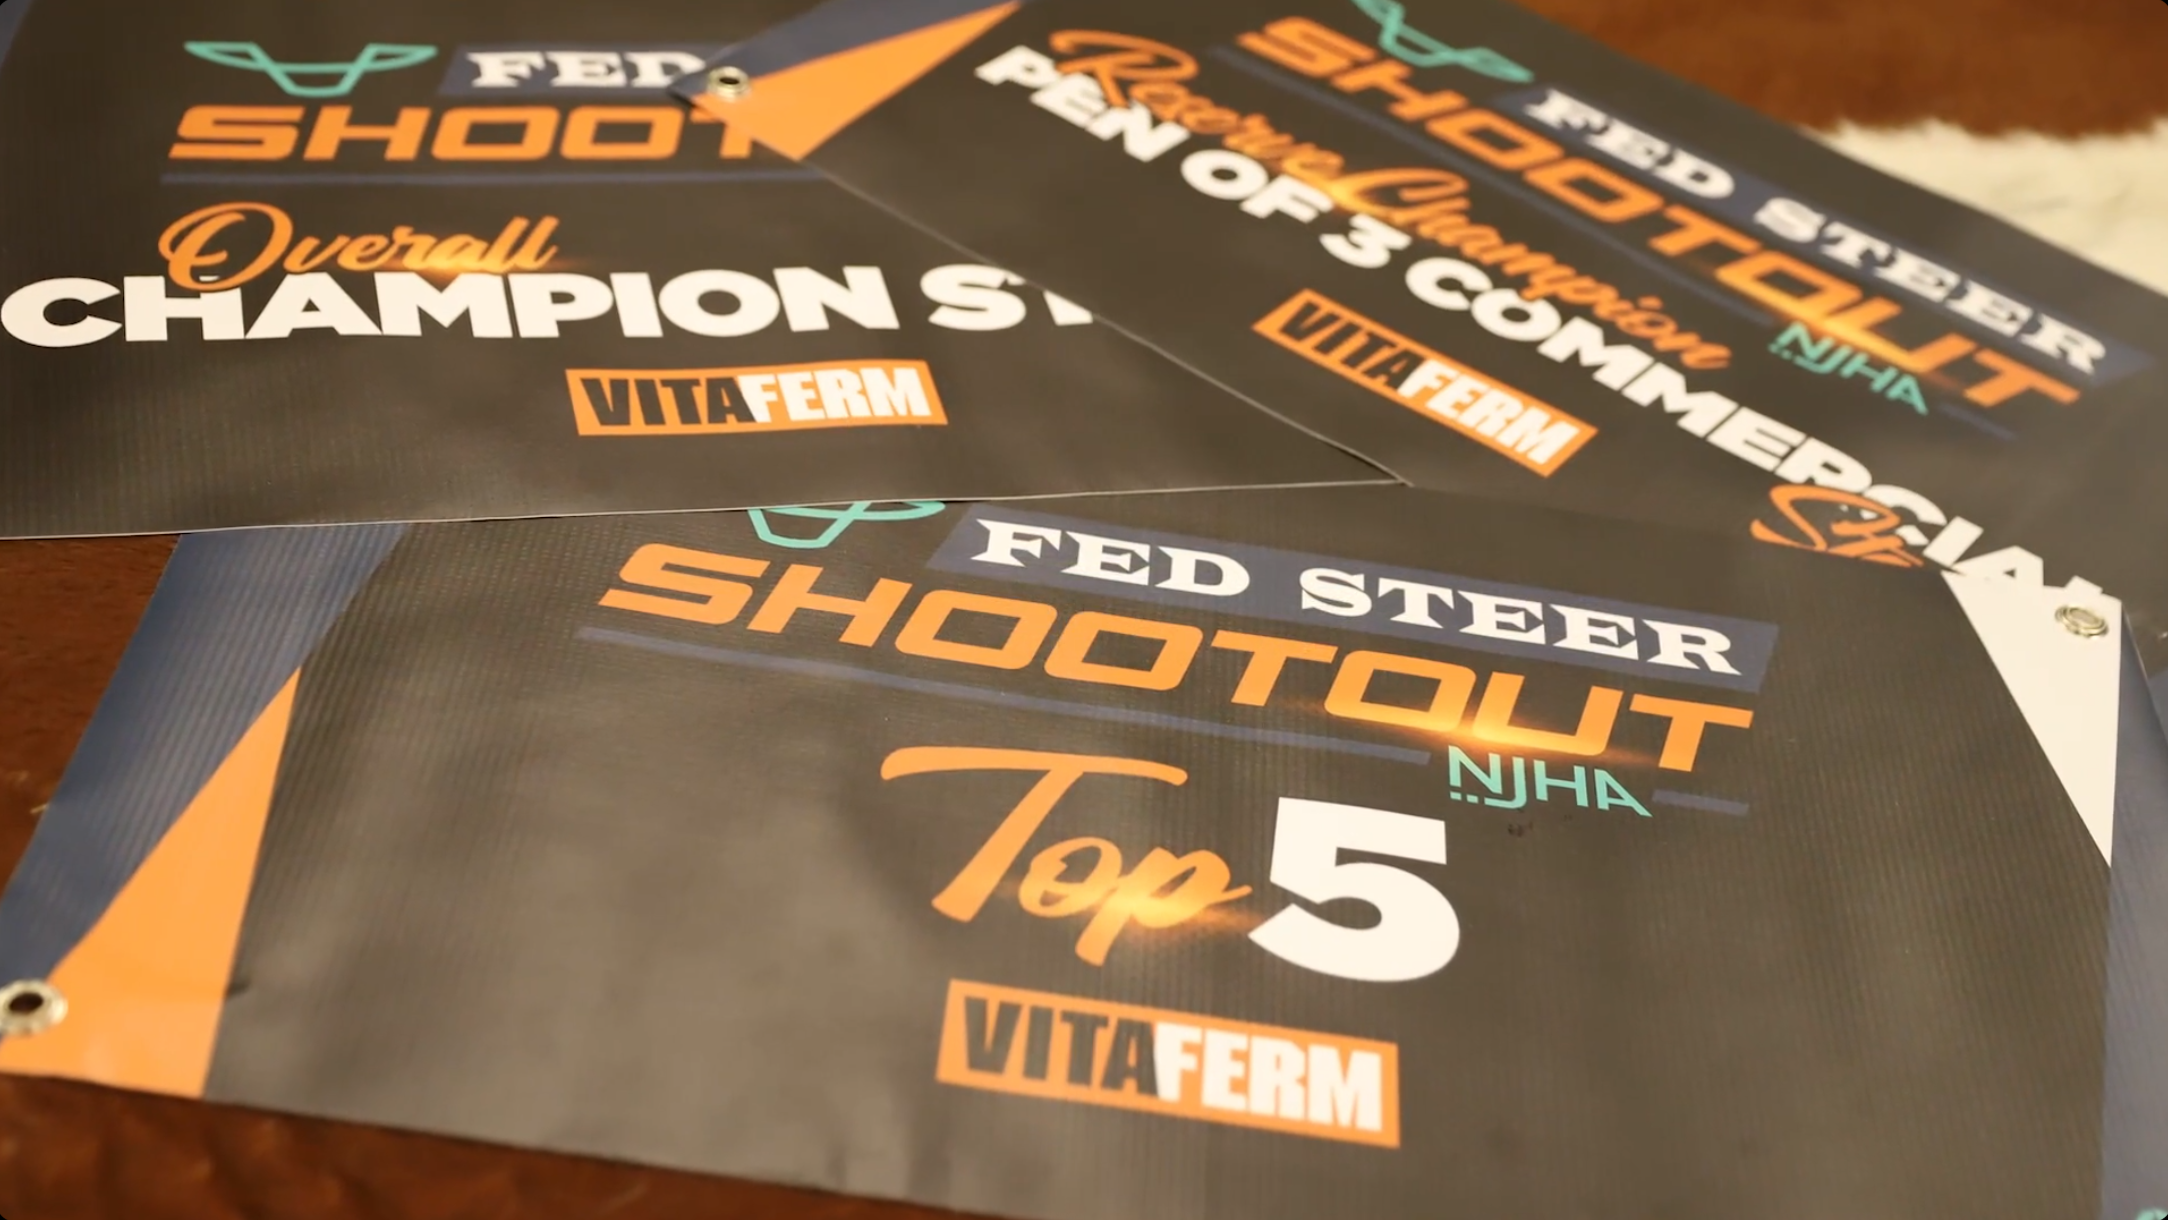 NJHA Fed Steer Shootout Contest Winners Named